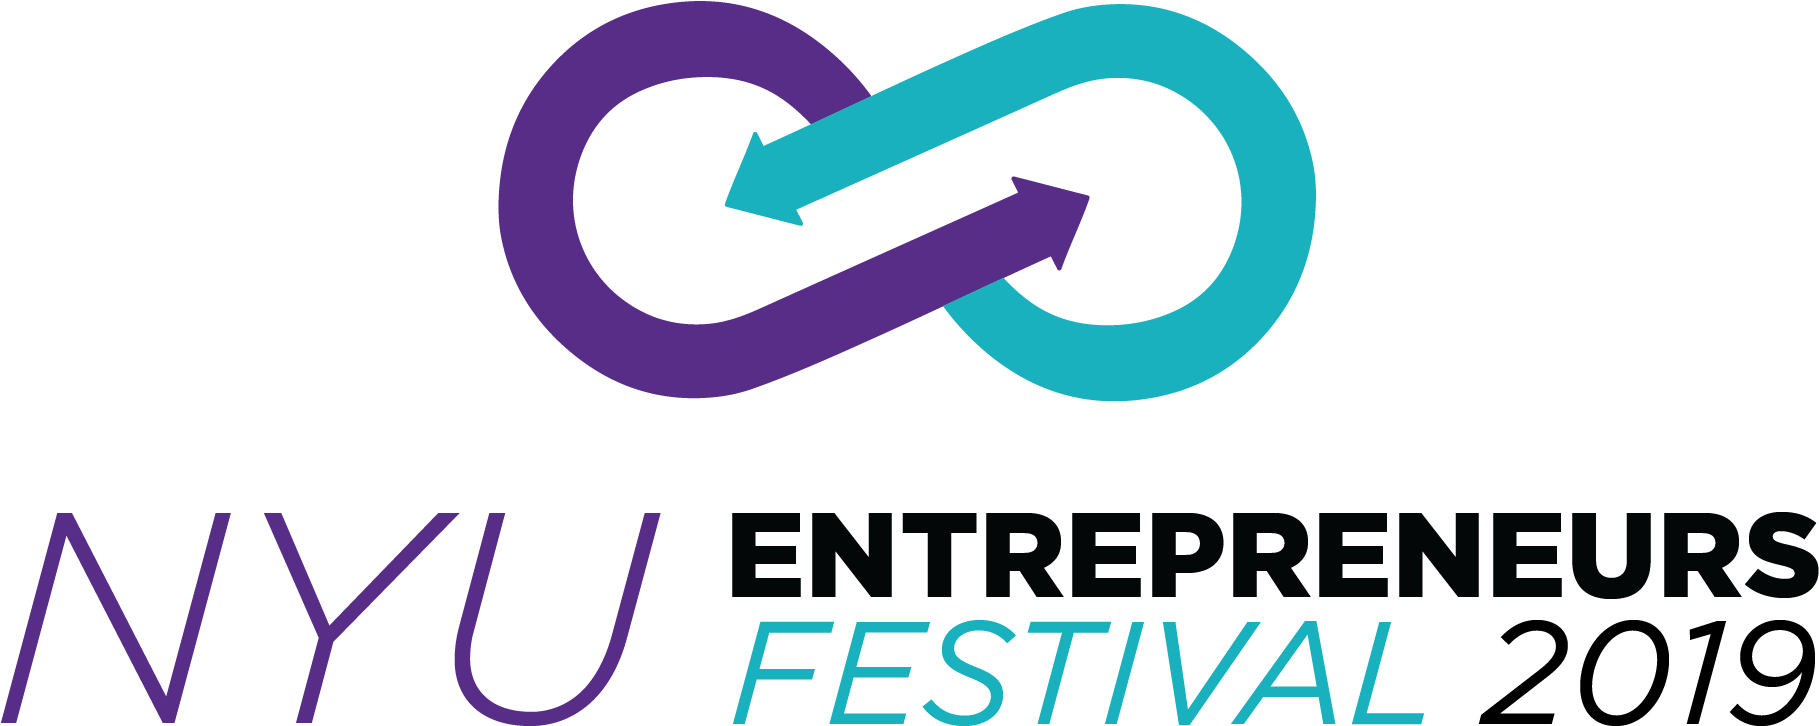 N Y U Entrepreneurs Festival2019 Logo PNG